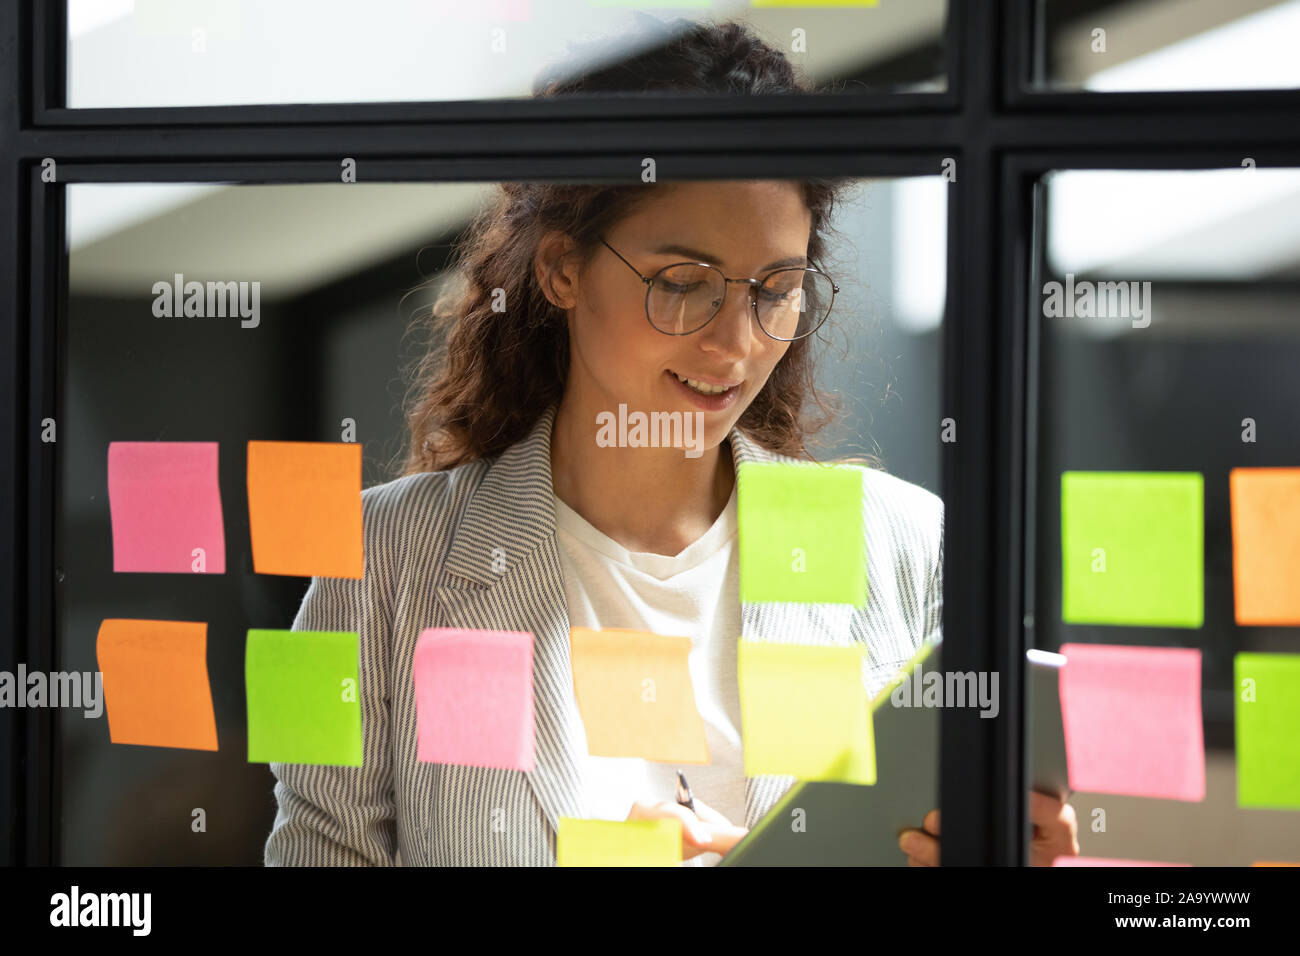 Smiling smart businesswoman using kanban agile scrum method glass board. Stock Photo